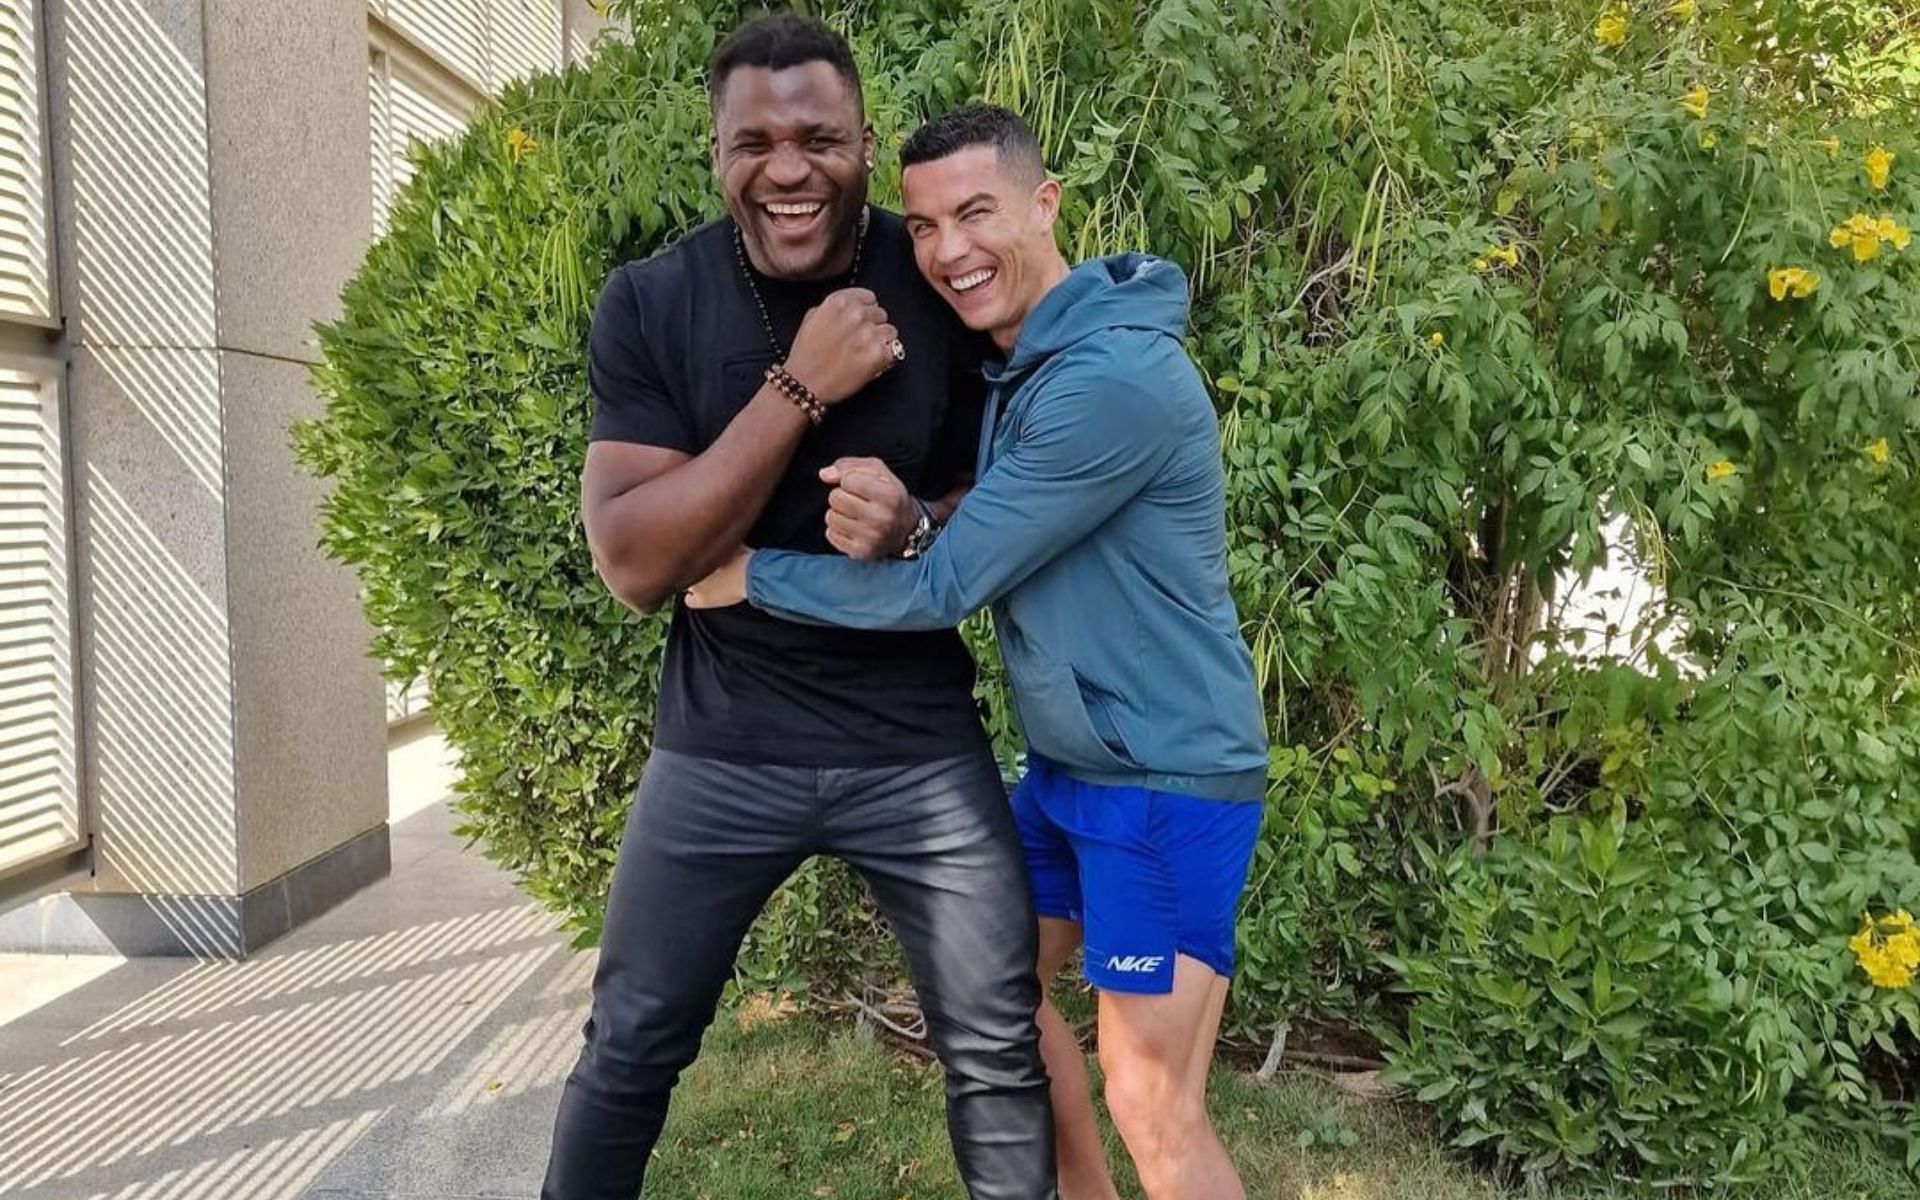 Francis Ngannou with Cristiano Ronaldo (Image credits @francisngannou on Instagram)